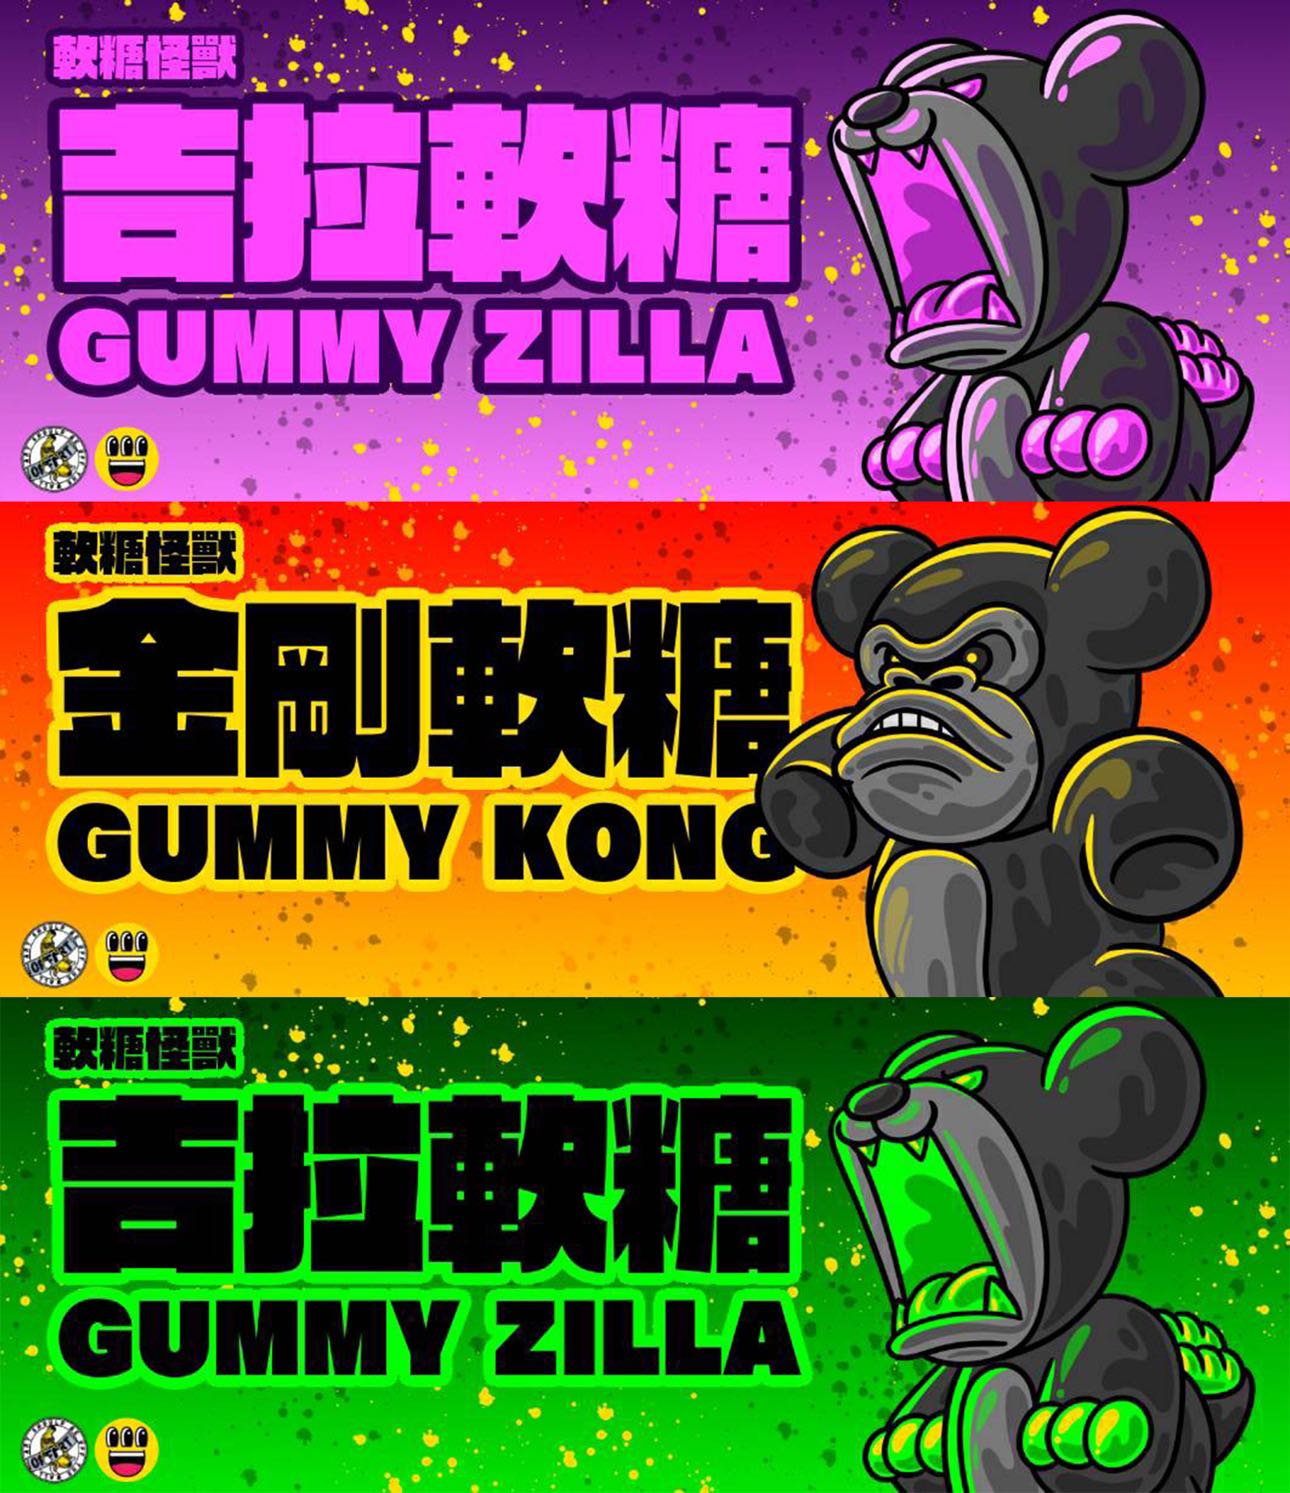 Just Kidding Gummy Monster Zilla Vs Gummy Kong by Bruce - Preorder